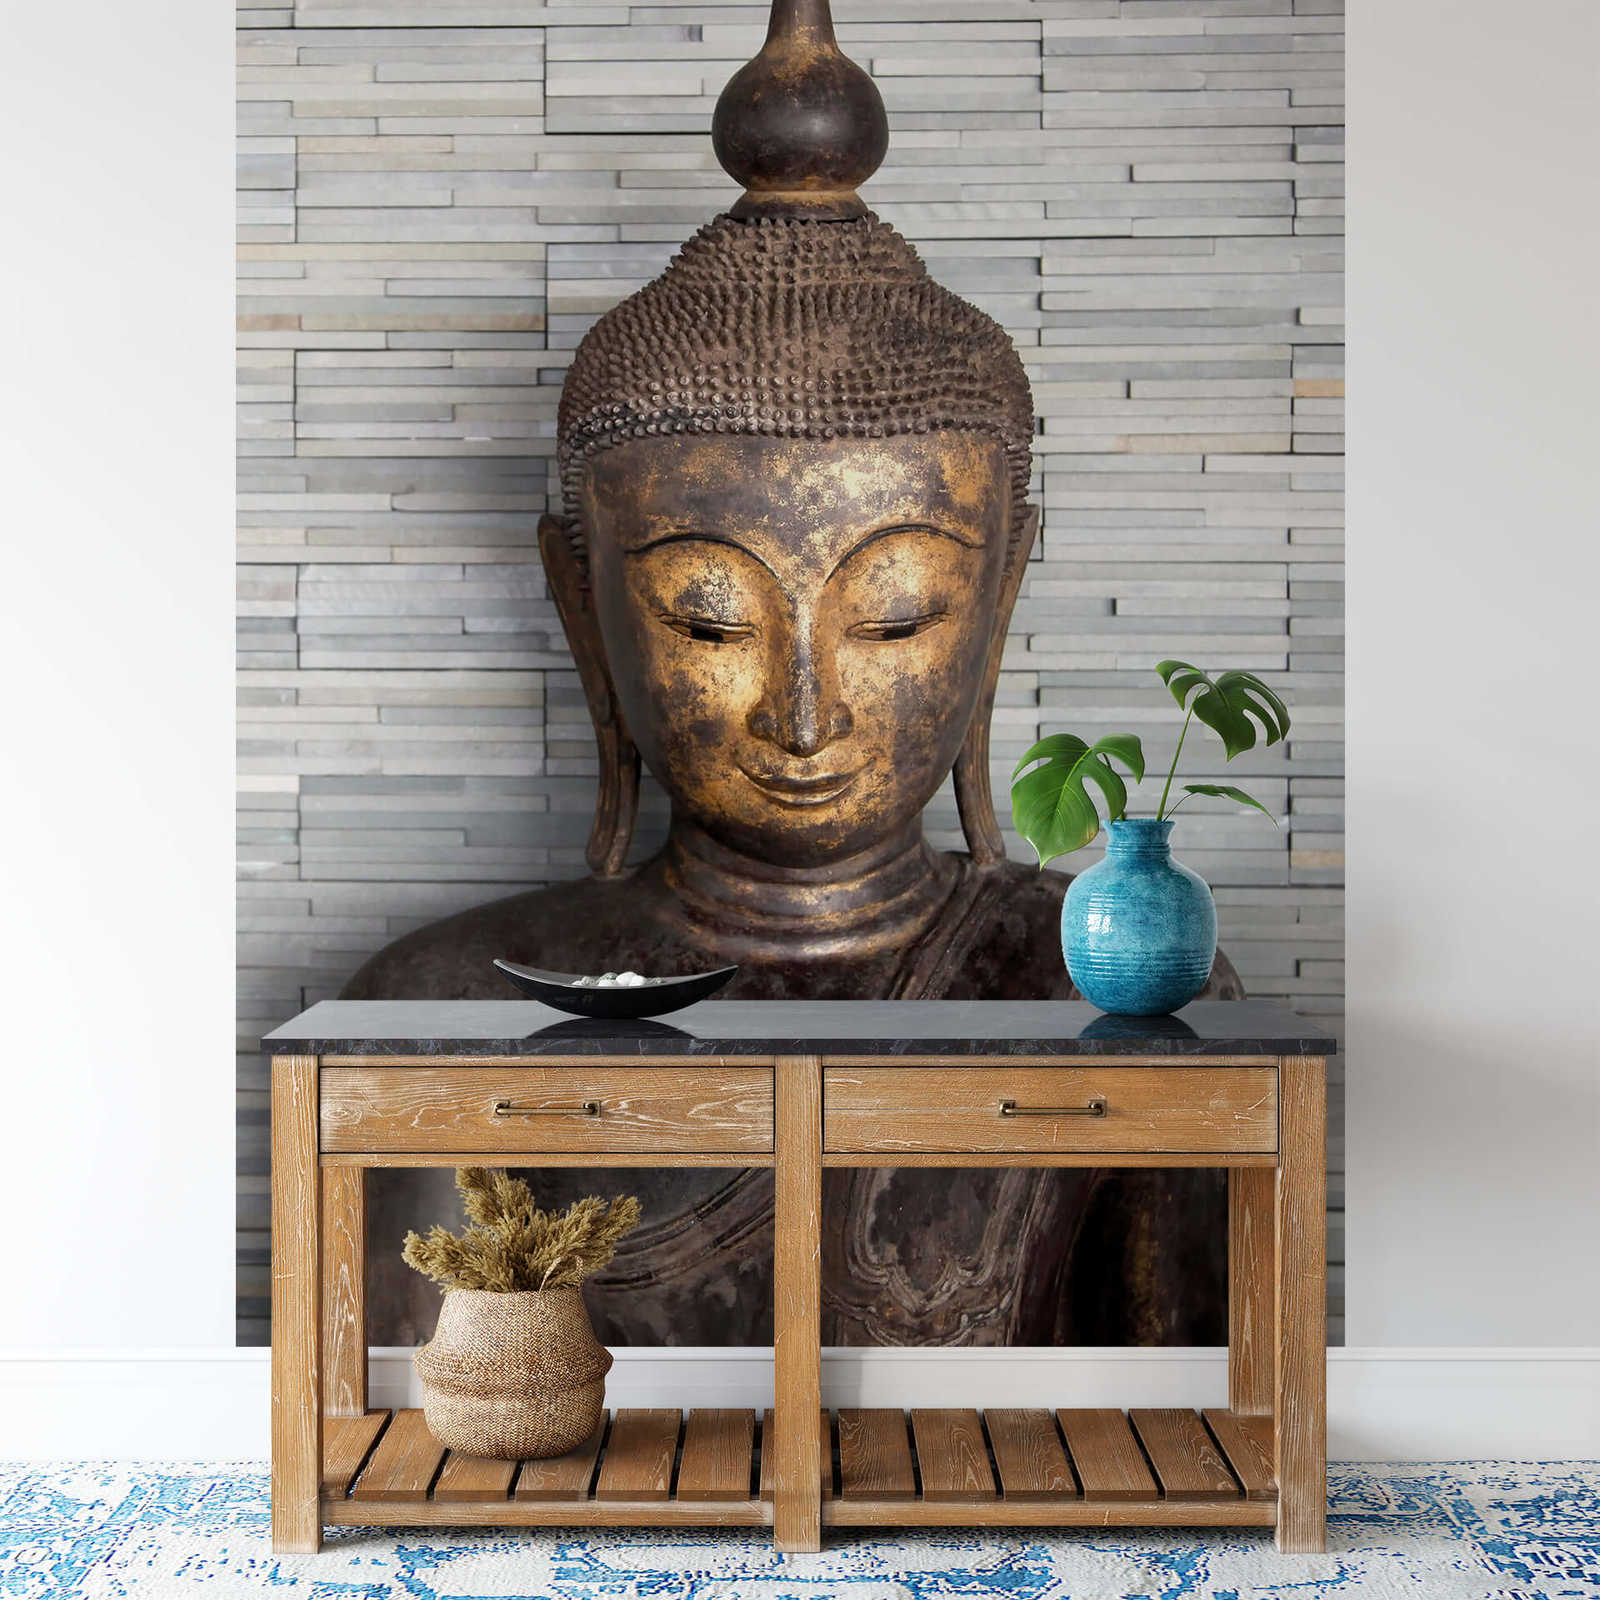             Photo wallpaper narrow with Buddha - Brown, Grey
        